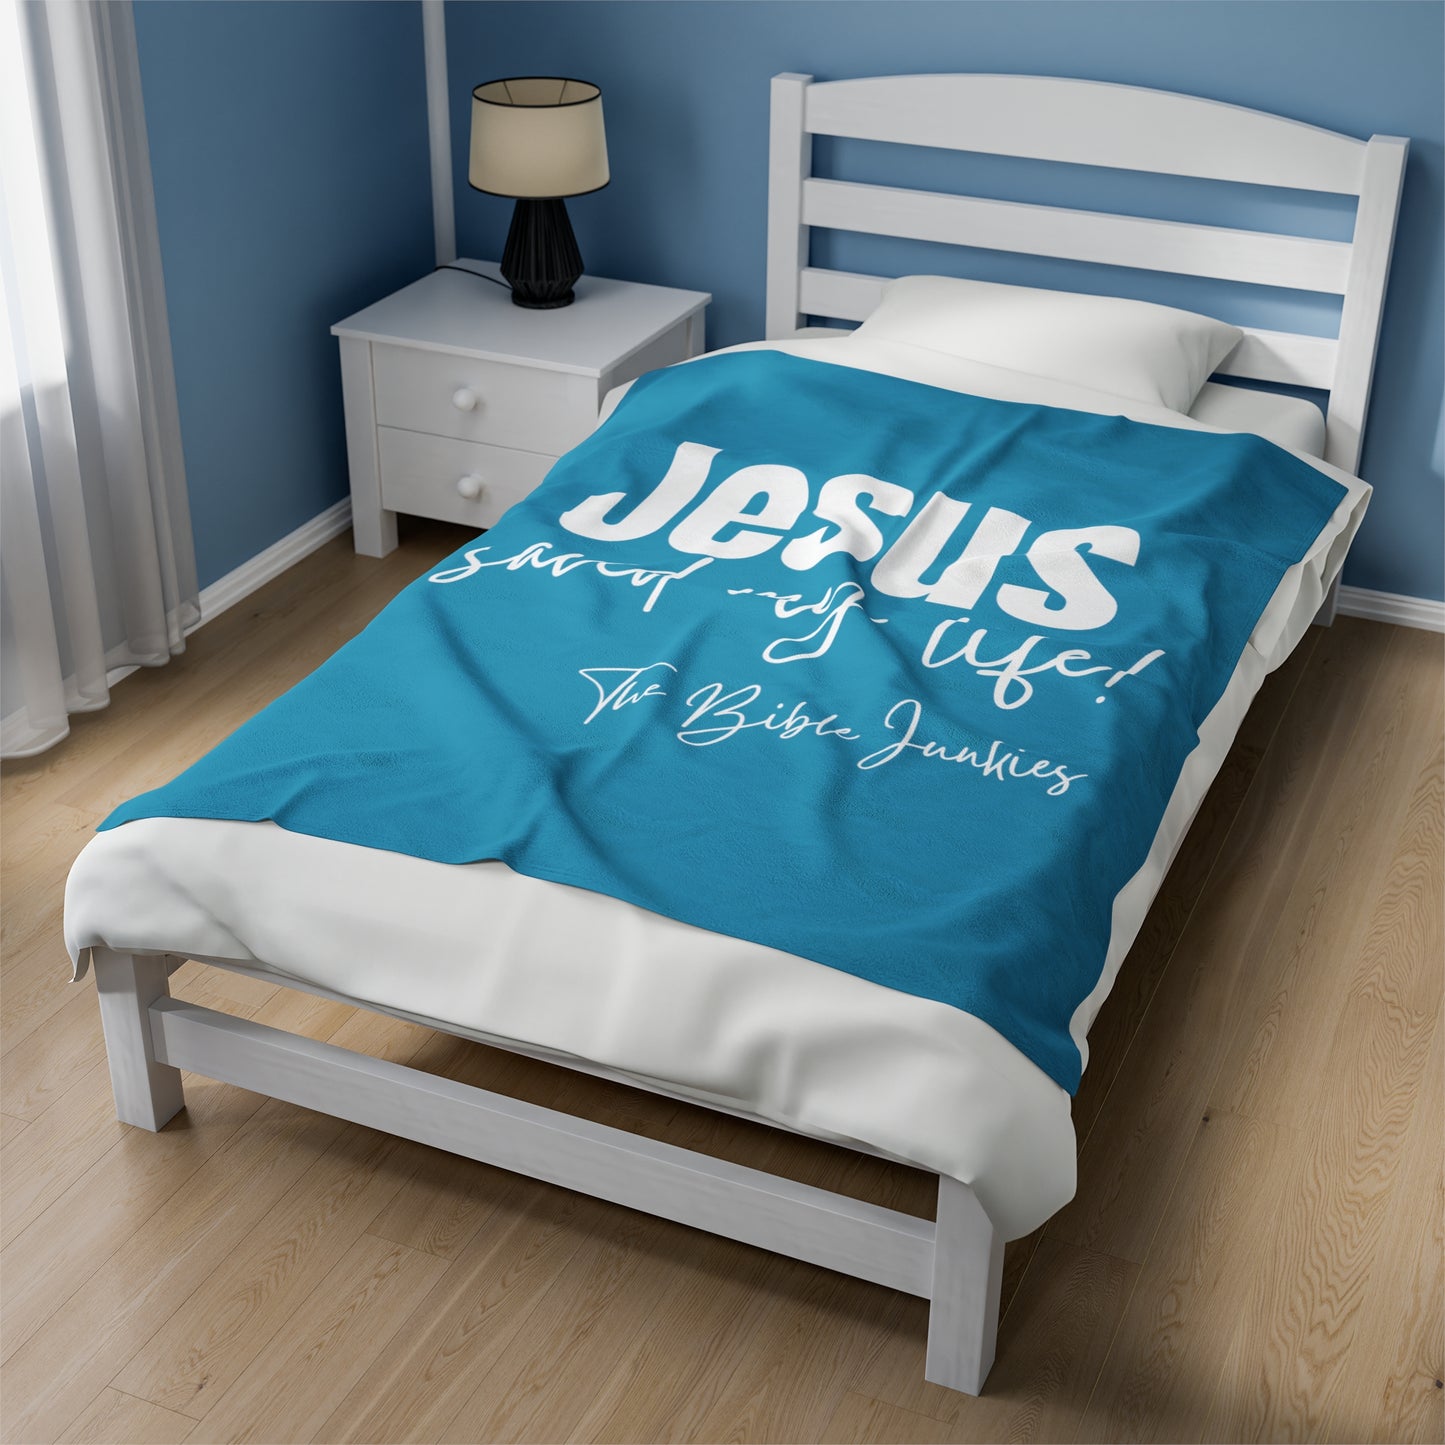 Jesus Saved My Life, Velveteen Plush Blanket - The Bible Junkies®